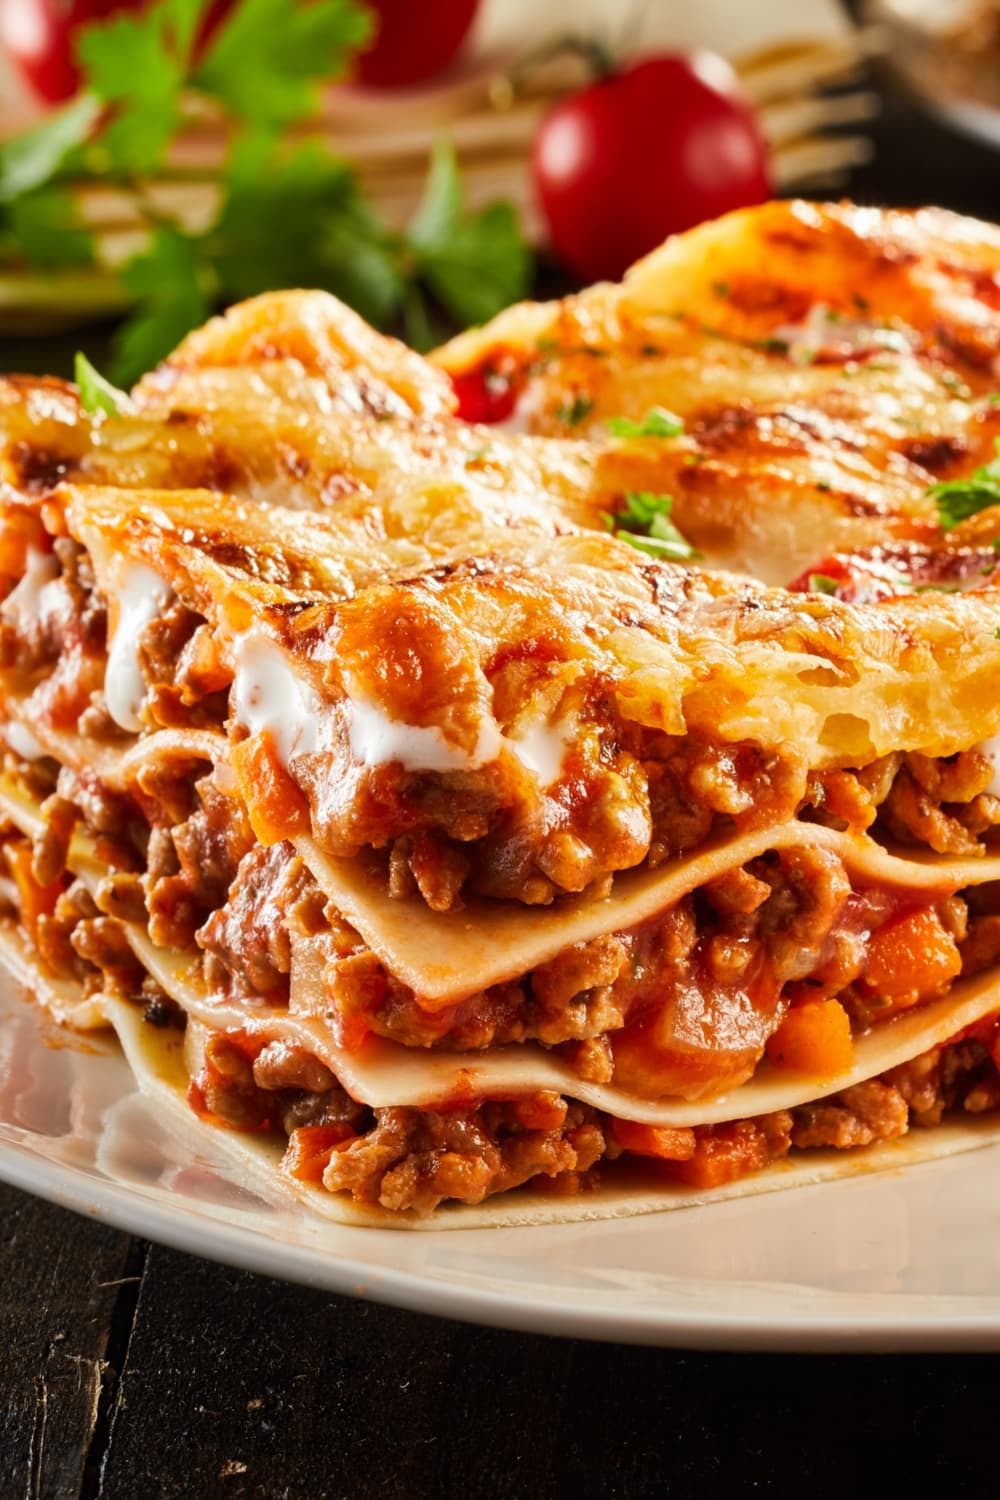 Homemade Barilla Lasagna with Ground Beef and Tomato Sauce